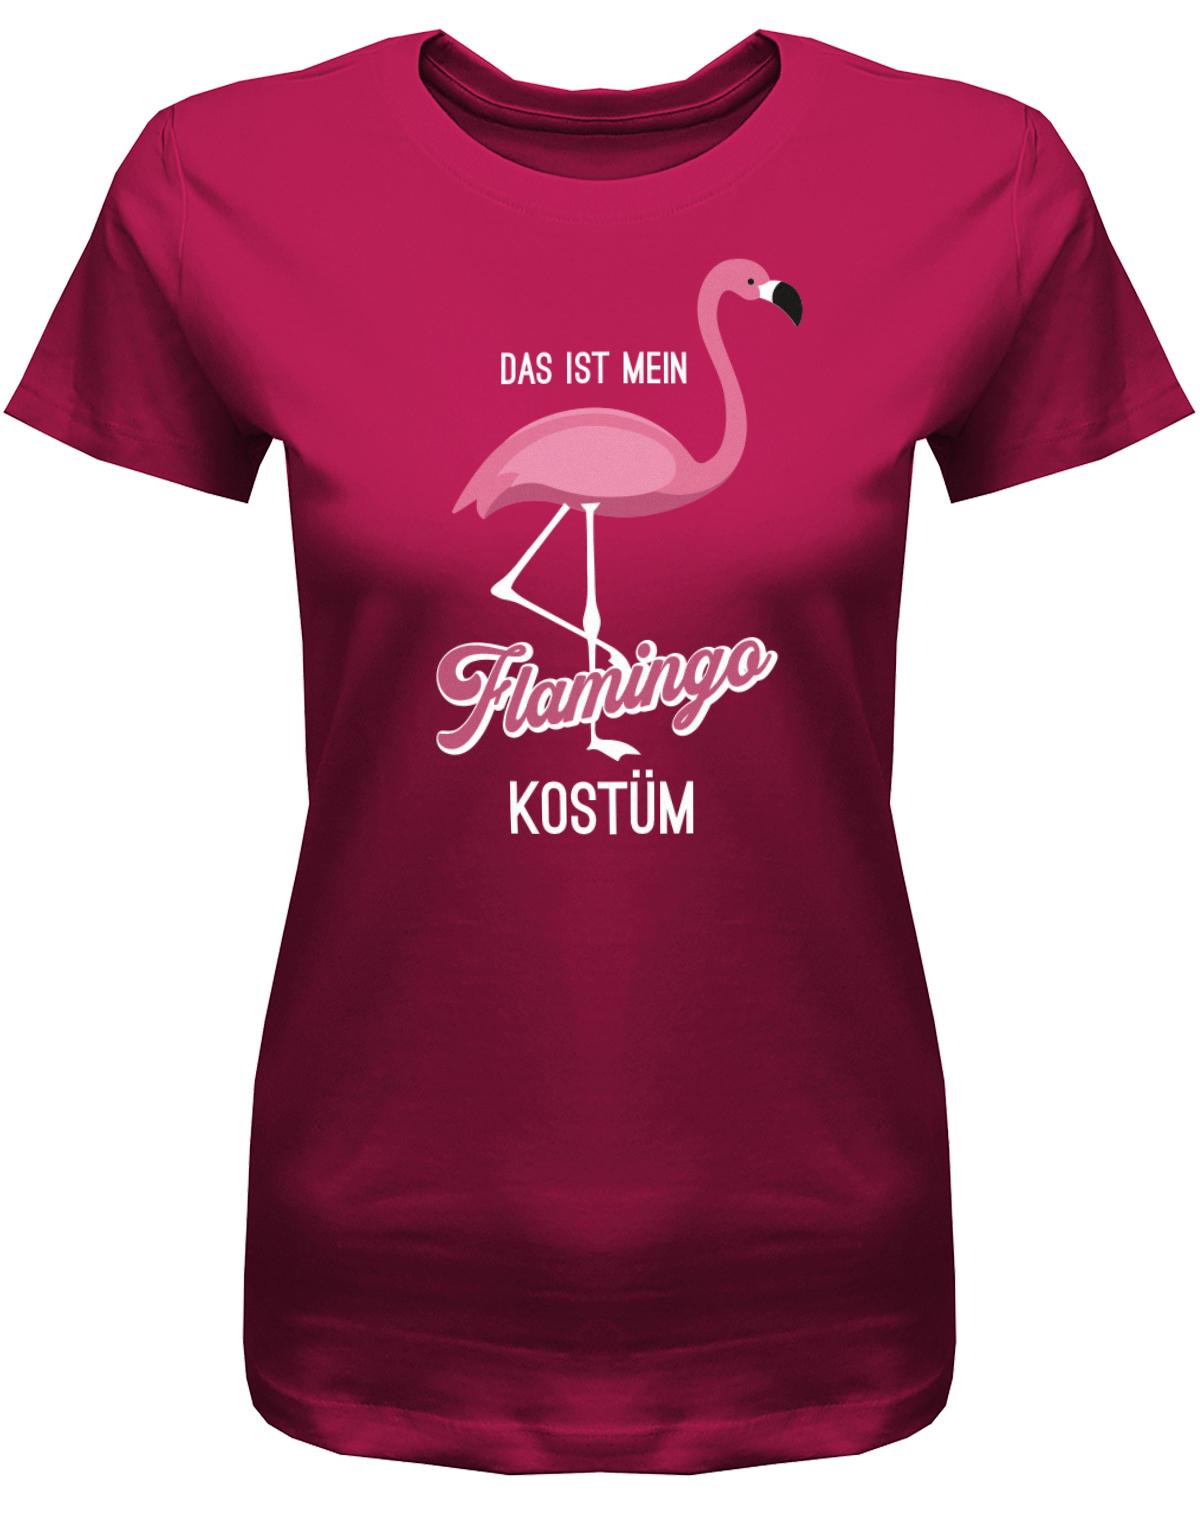 Das-ist-mein-Flamingo-Kost-m-Fasching-Karneval-Verkleidung-Shirt-Damen-Sorbet